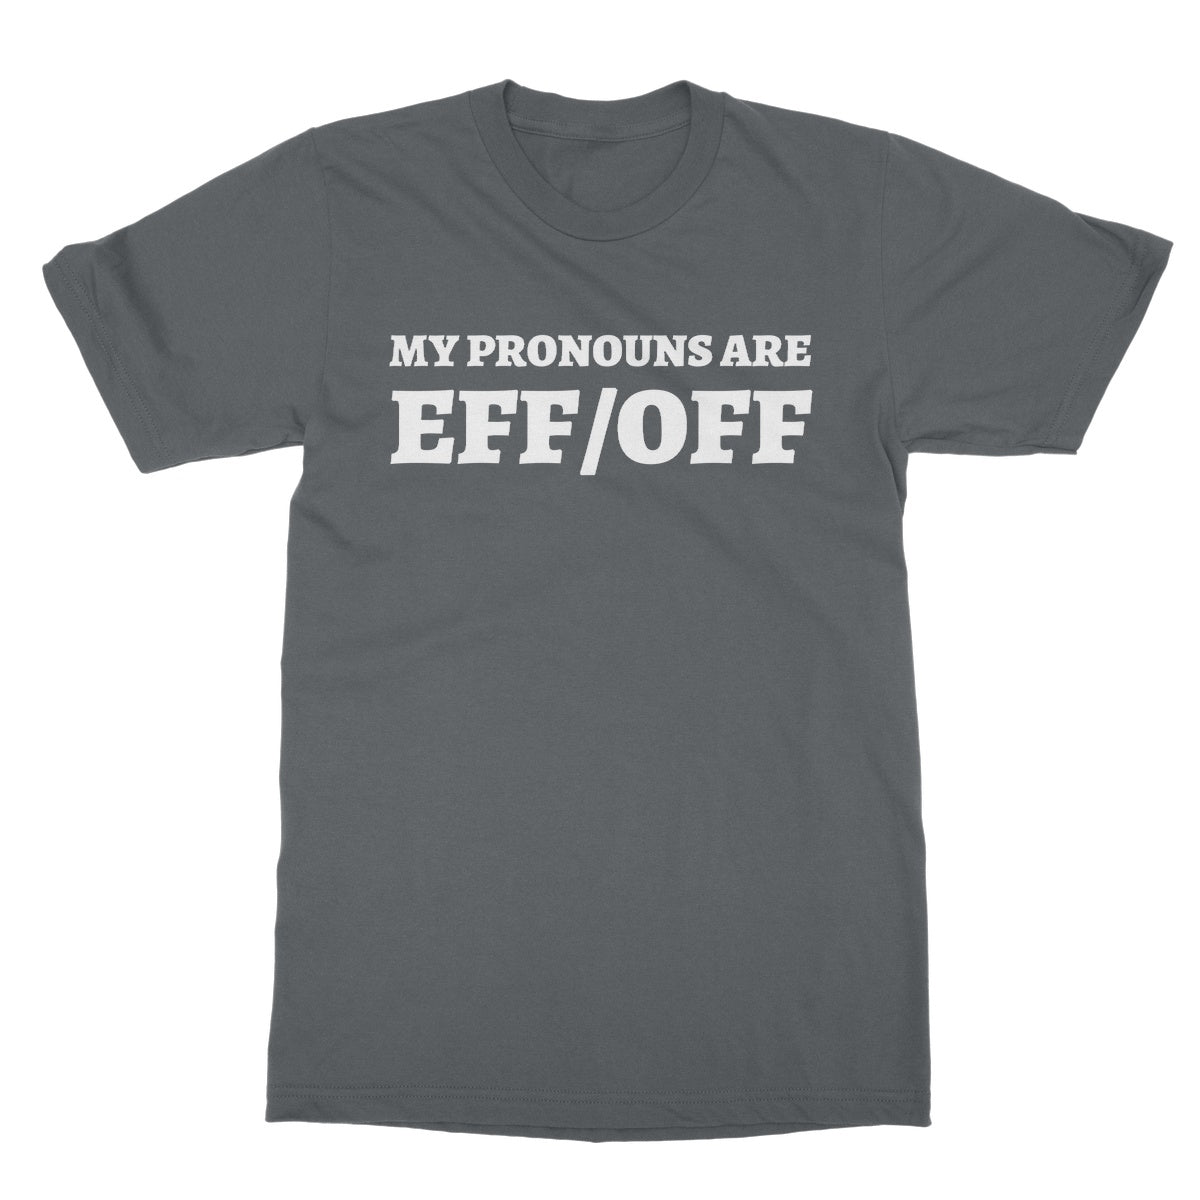 eff off t shirt grey